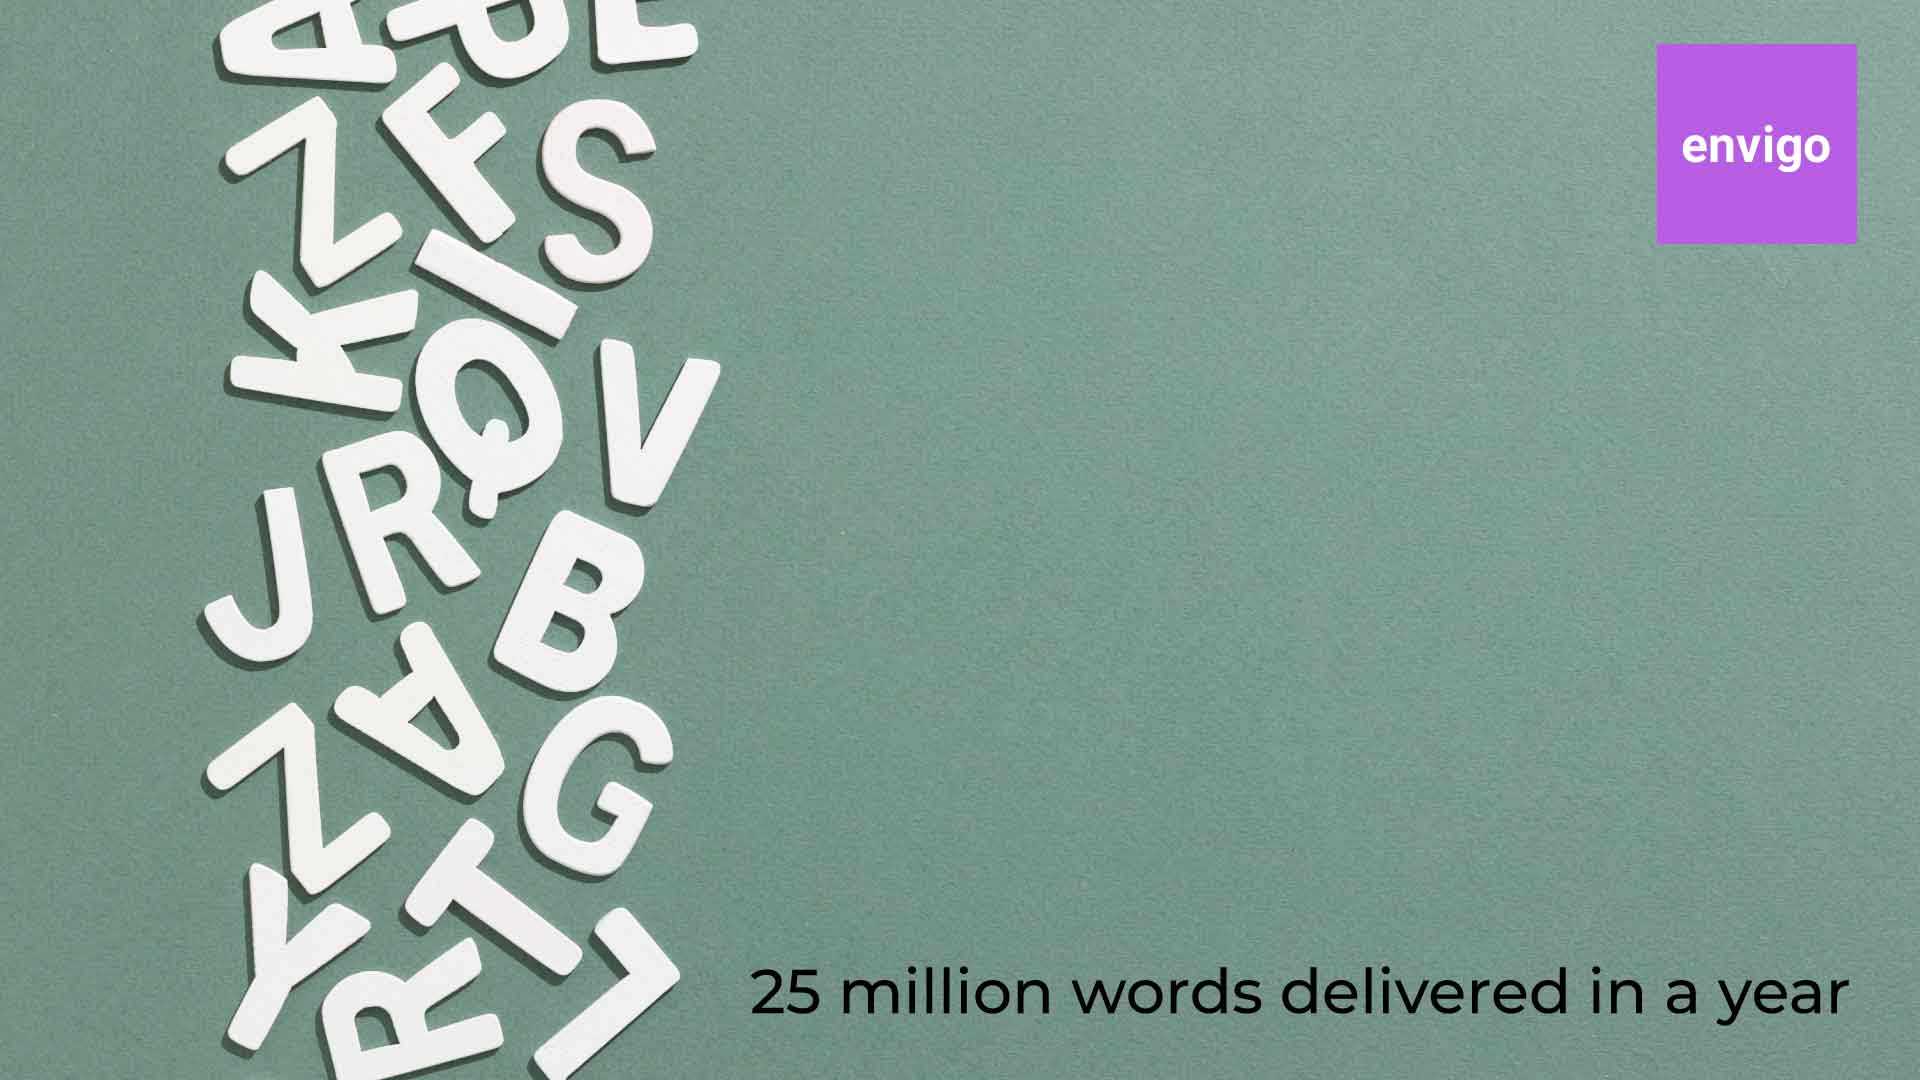 Envigo celebrates 25 million words delivered in a year